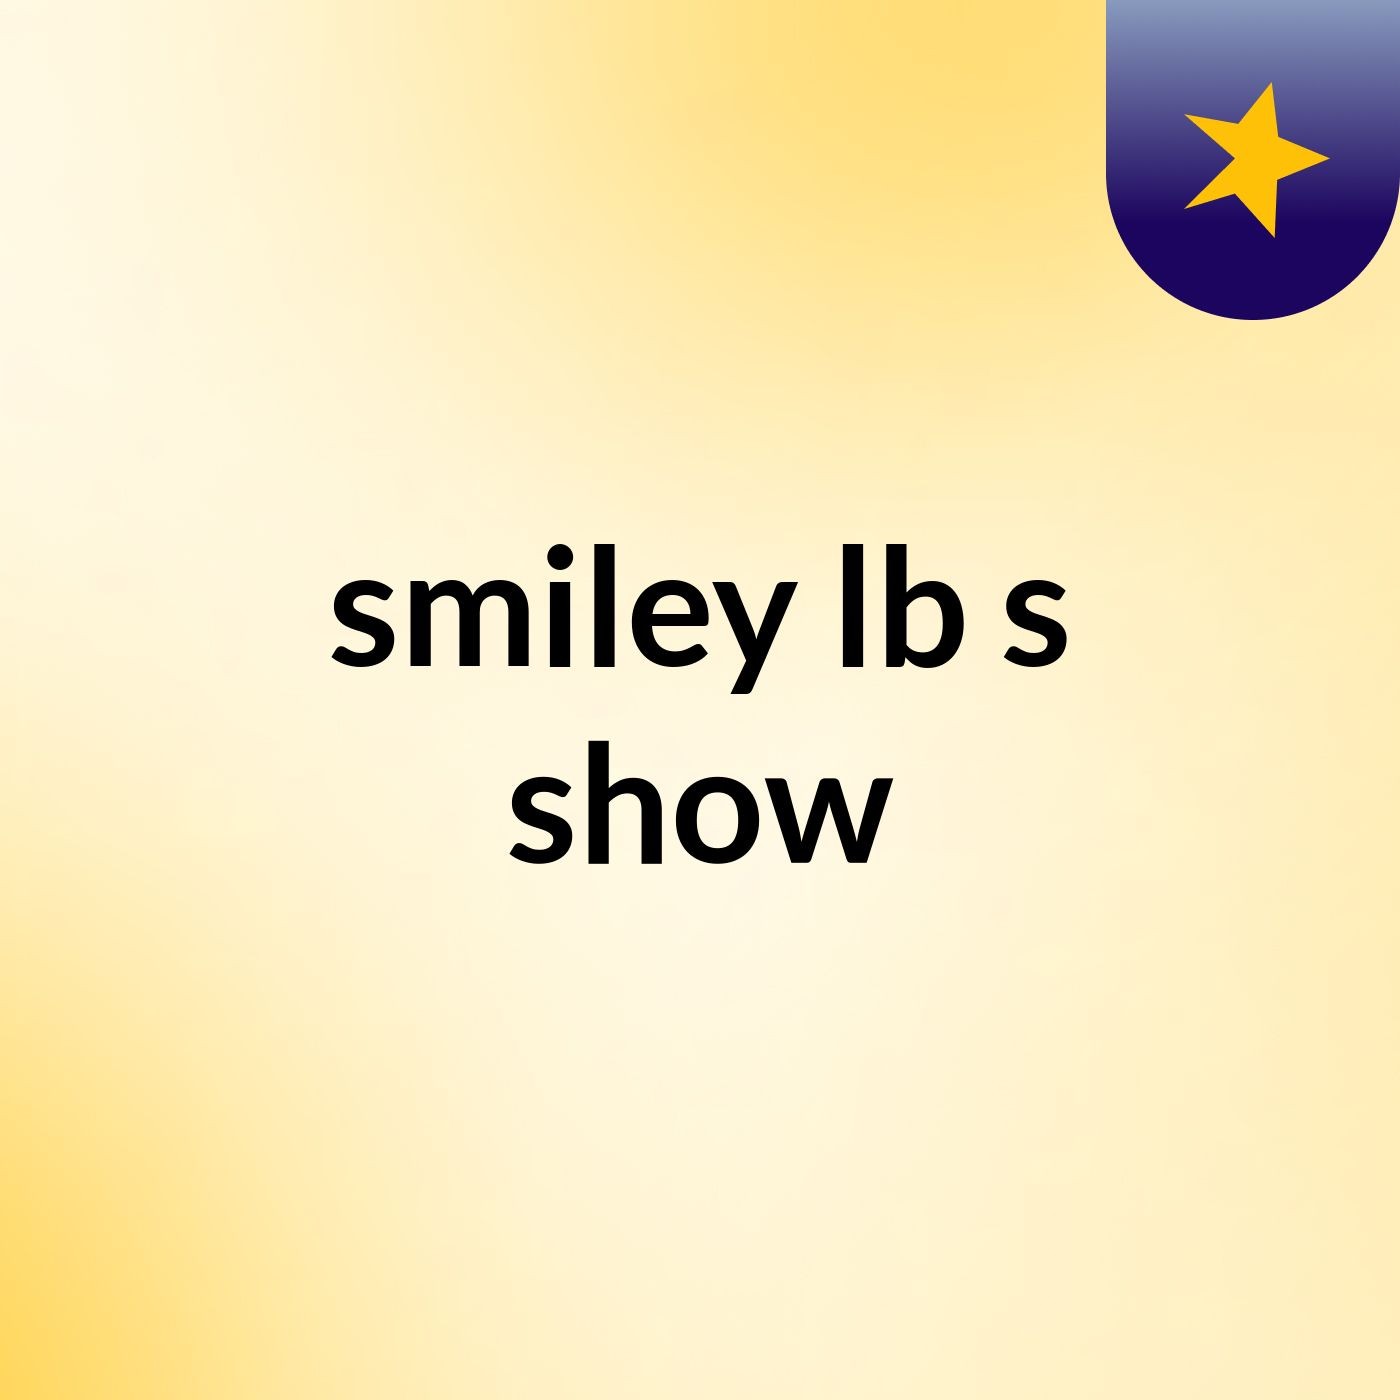 smiley lb's show